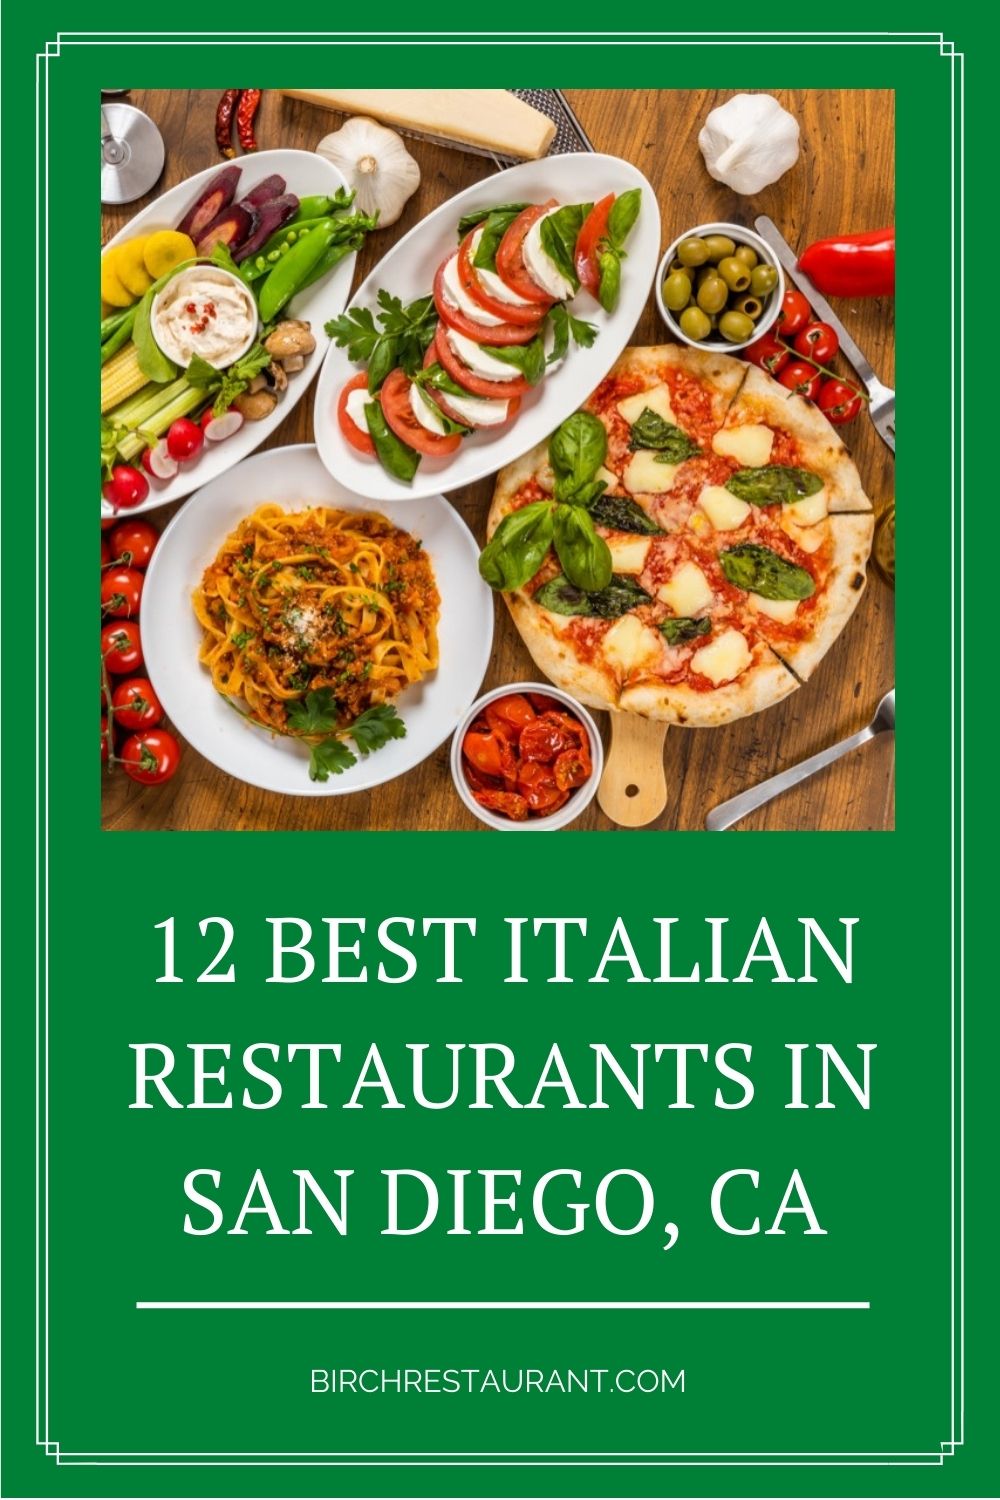 Best Italian Restaurants in San Diego